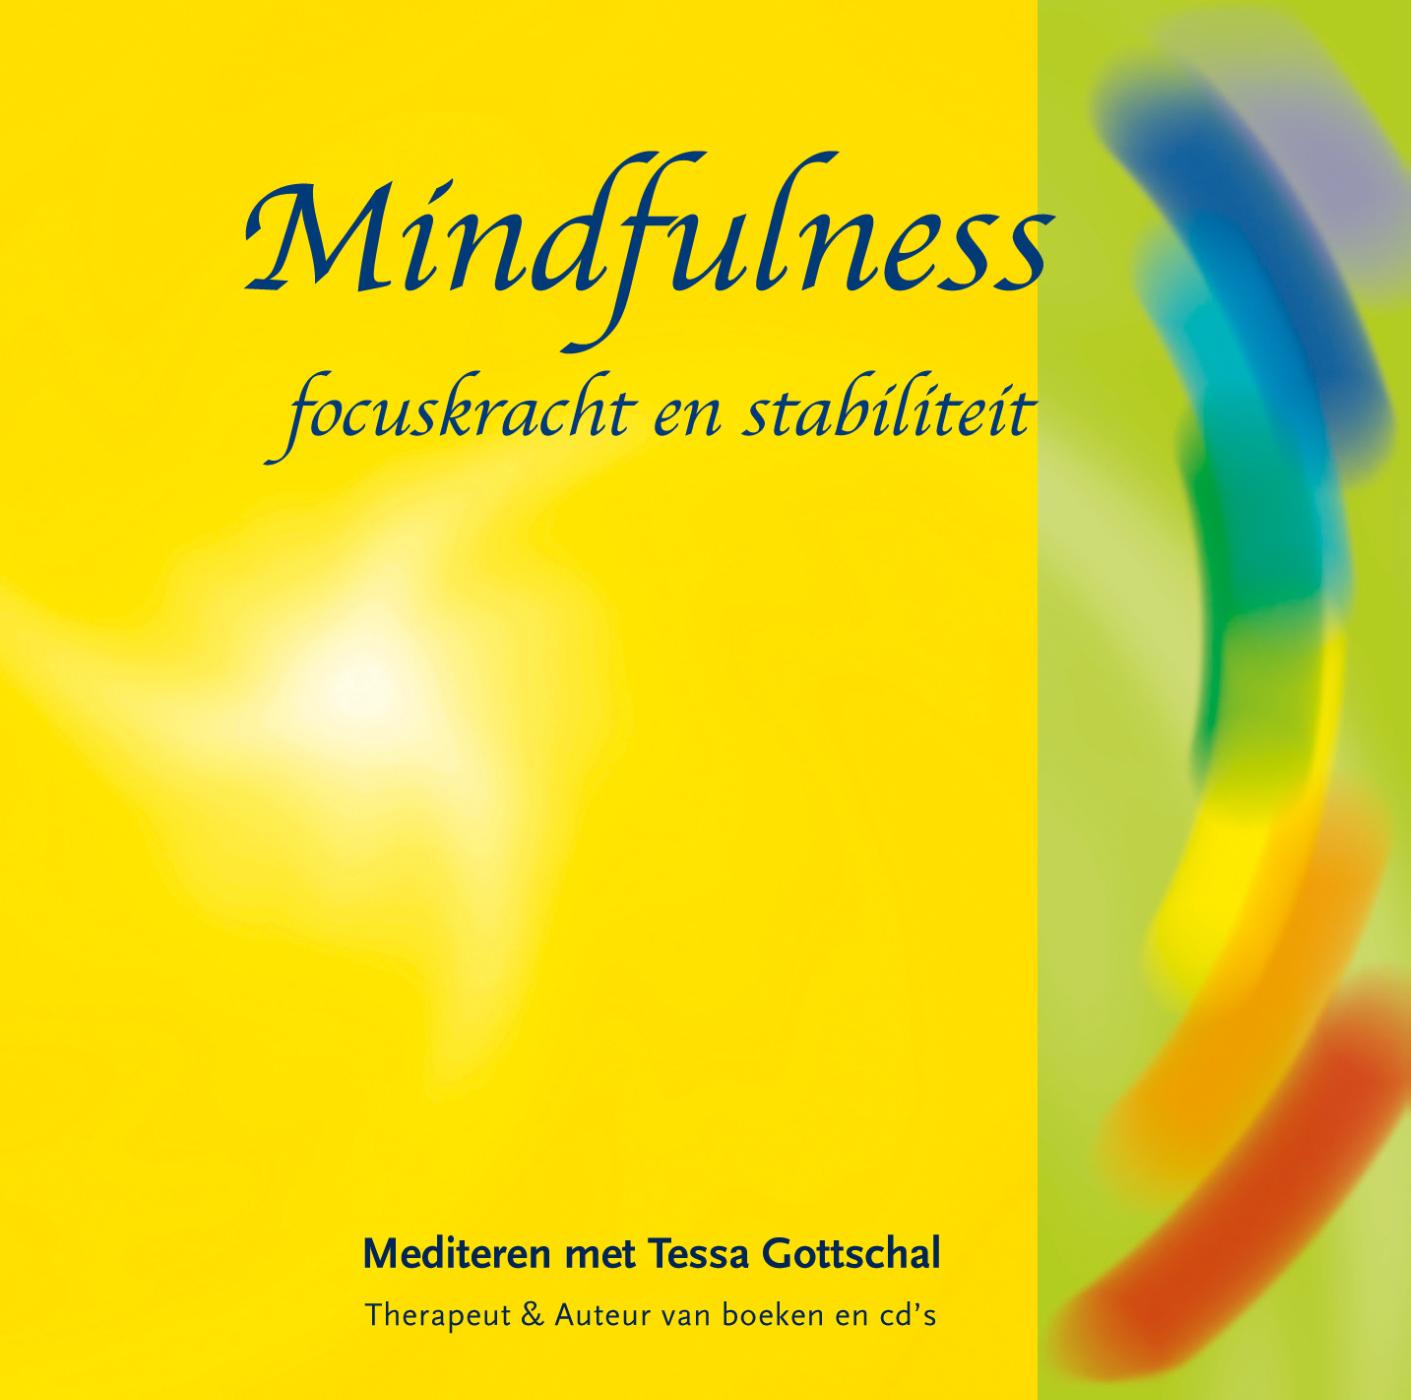 Mindfulness (Ebook)